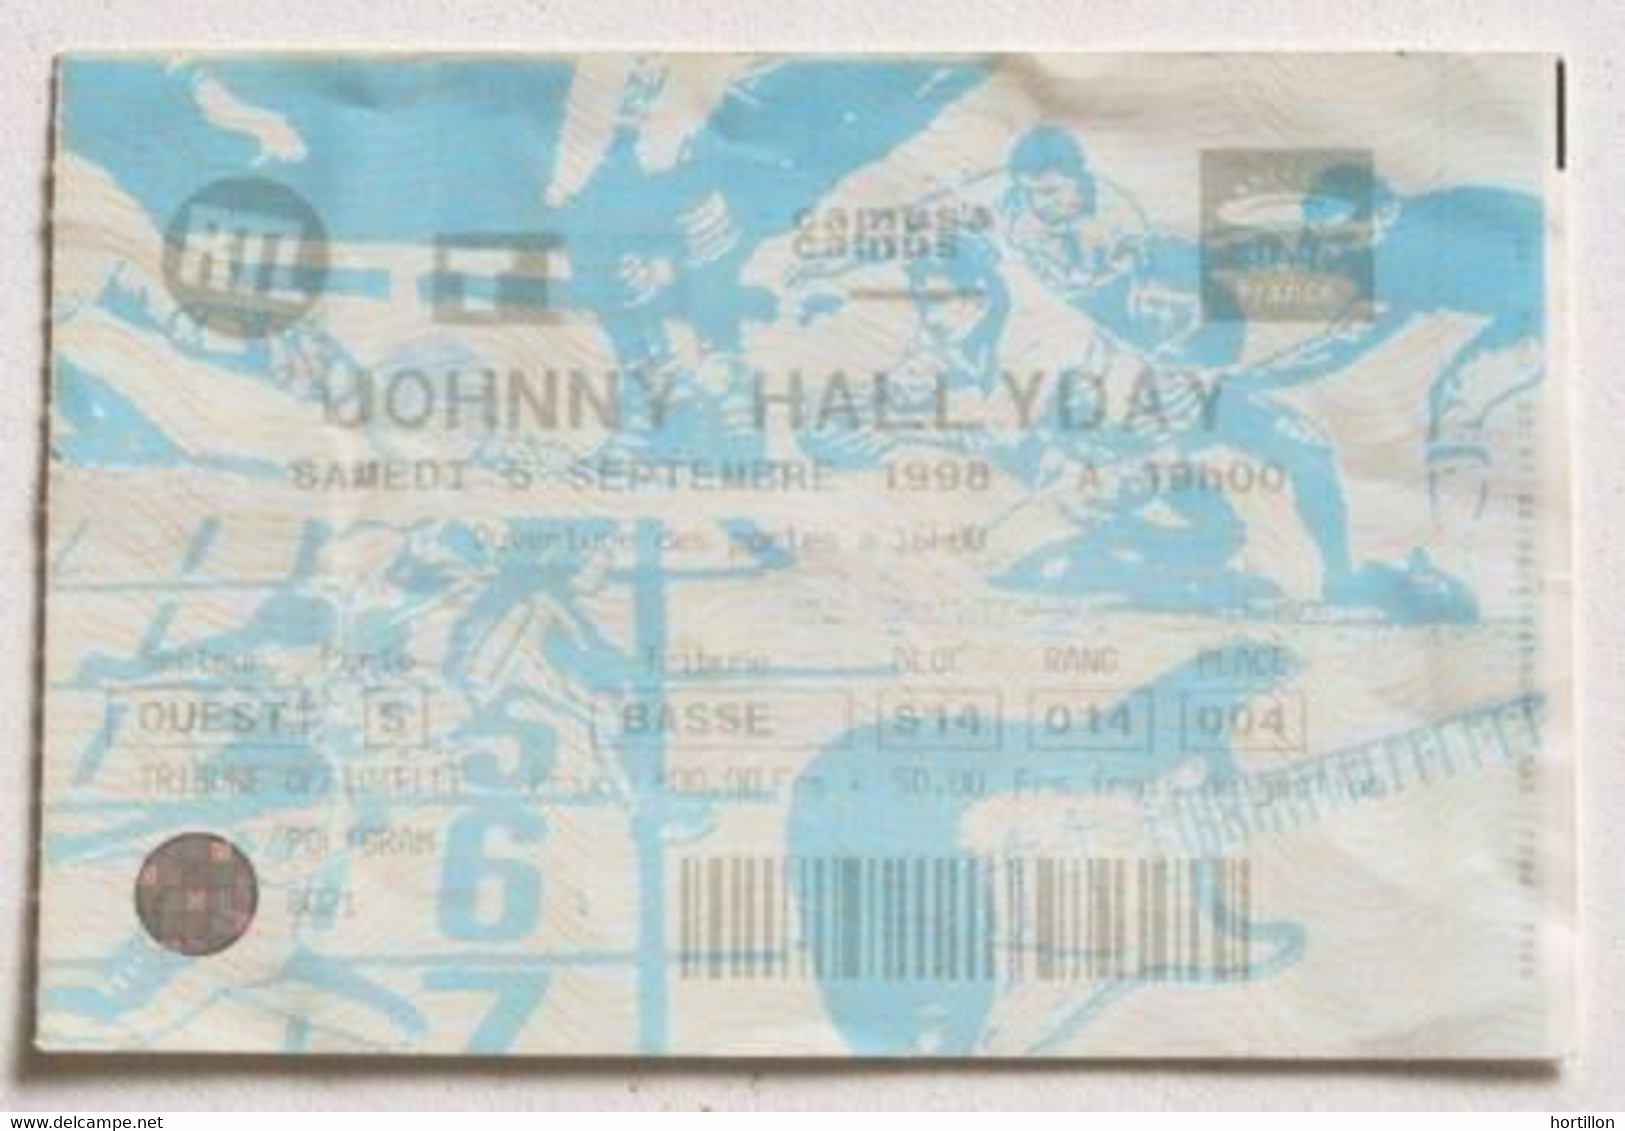 JOHNNY HALLYDAY Billet Ticket Concert FRANCE Paris Stade De France 05/09/1998 - Biglietti Per Concerti